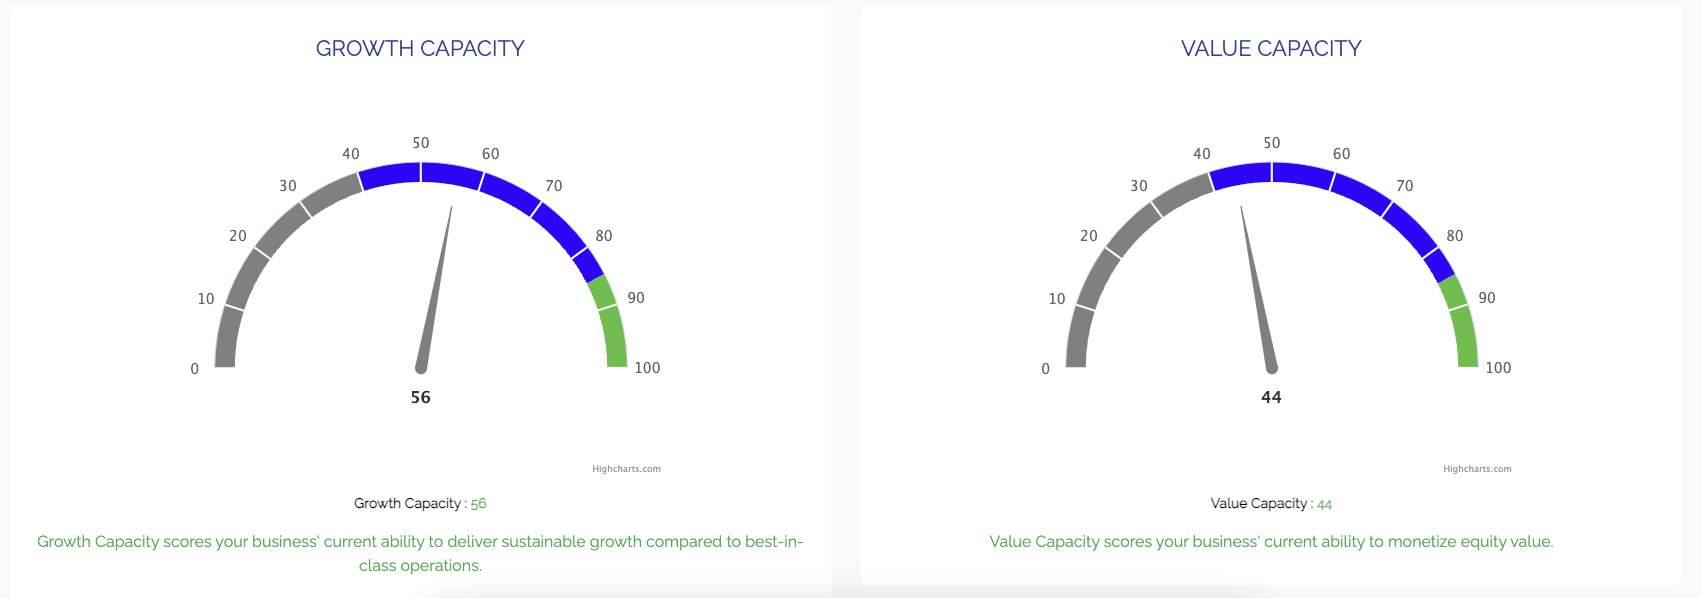 Ridge Growth and Value Capacity Dials